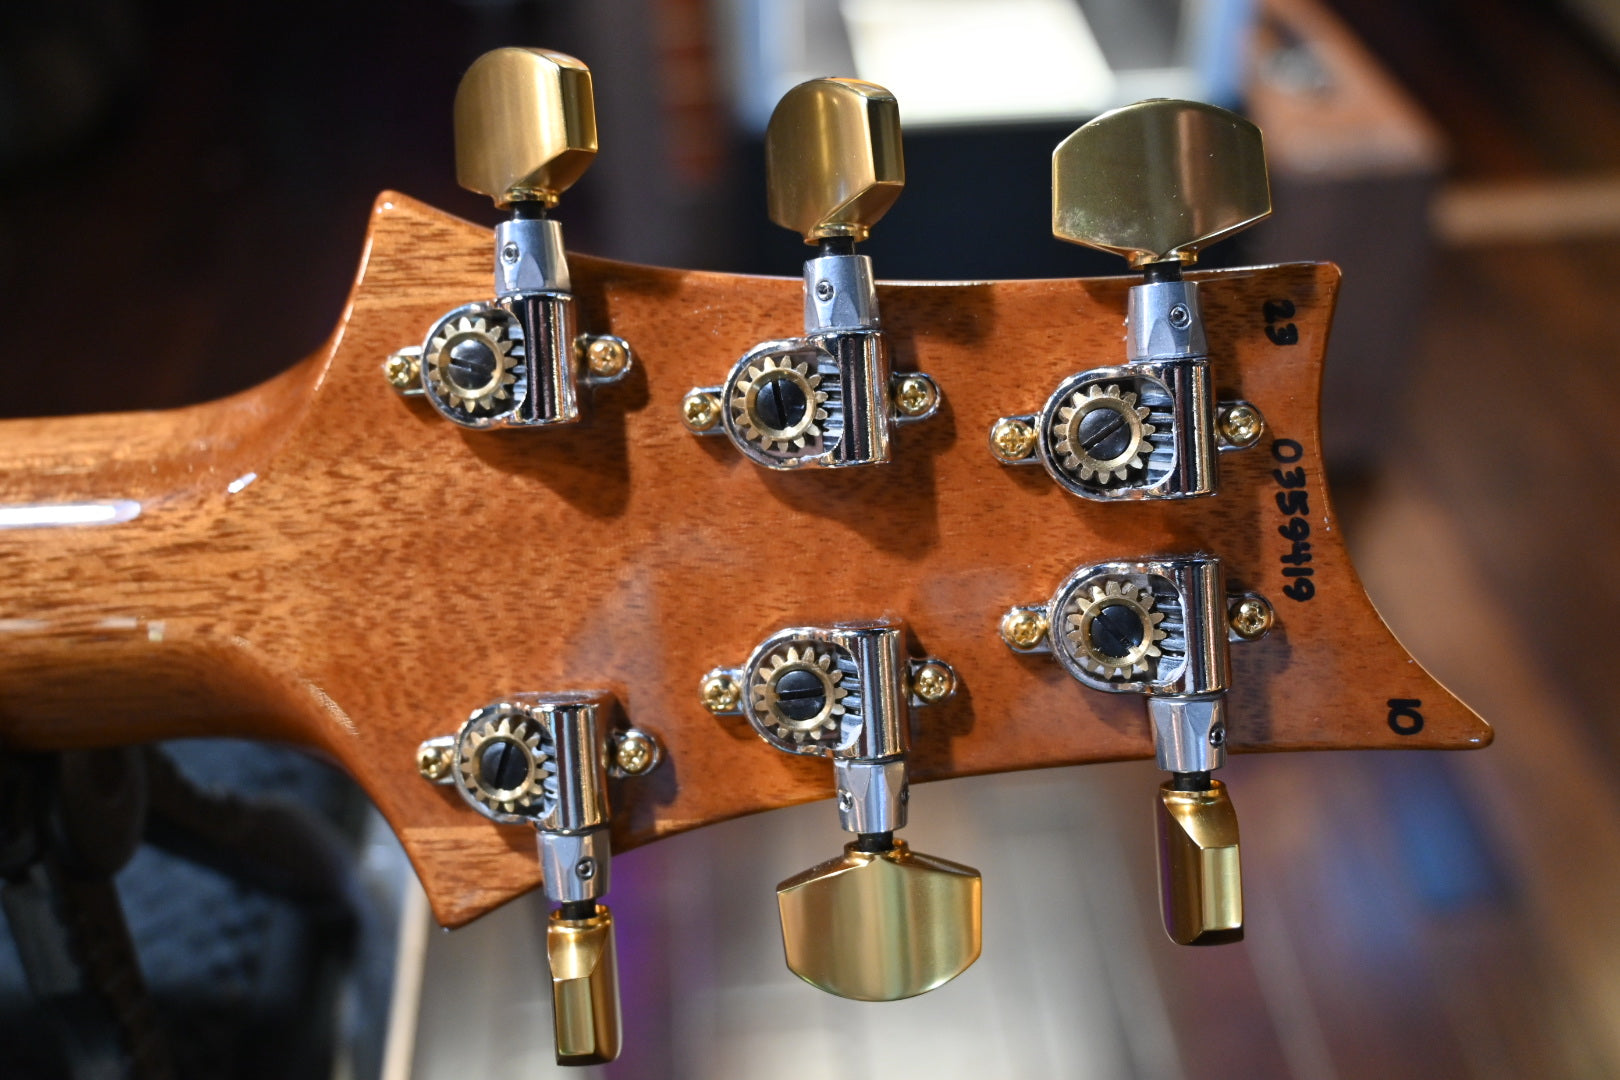 PRS Studio 10-Top - Charcoal Guitar #9419 - Danville Music